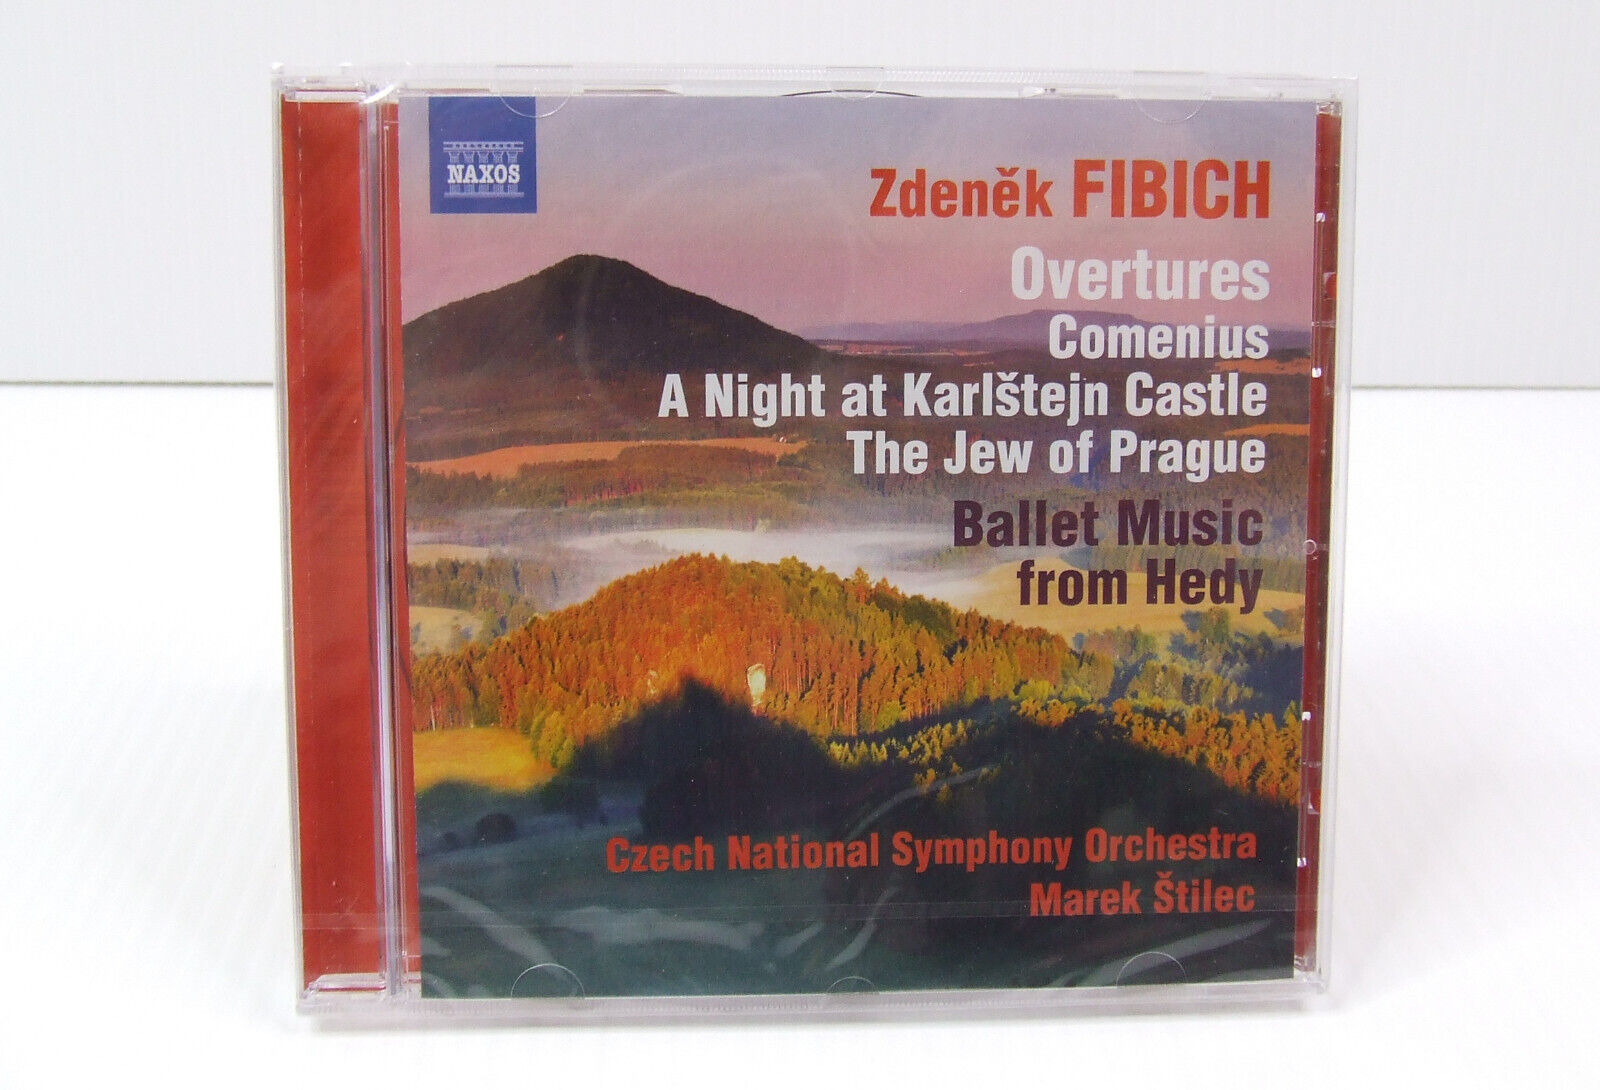 Zdenek Fibich - Overtures, Comenius, The Jew of Prague (CD, 2014 Naxos)